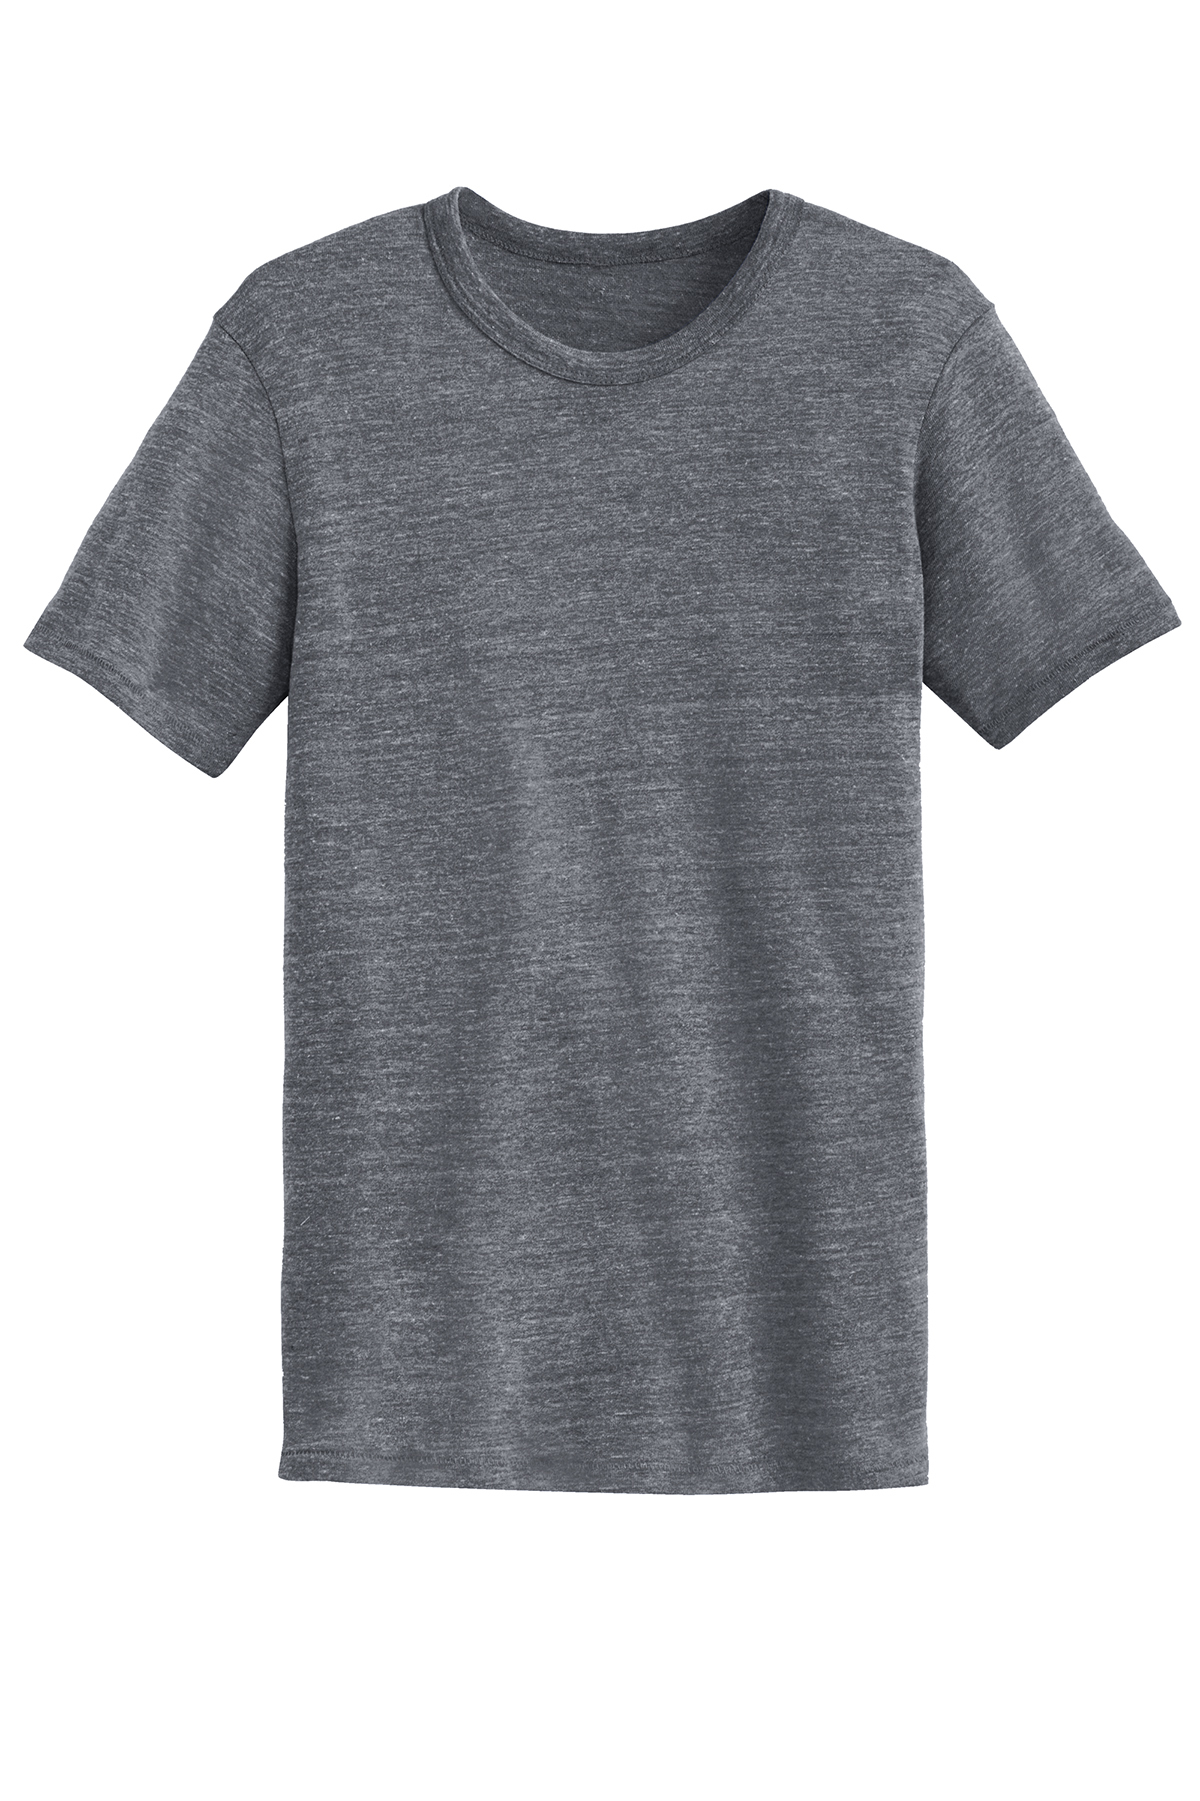 Details about   Alternative Men's Eco-Jersey Cuffed Long Sleeve T-Shirt 